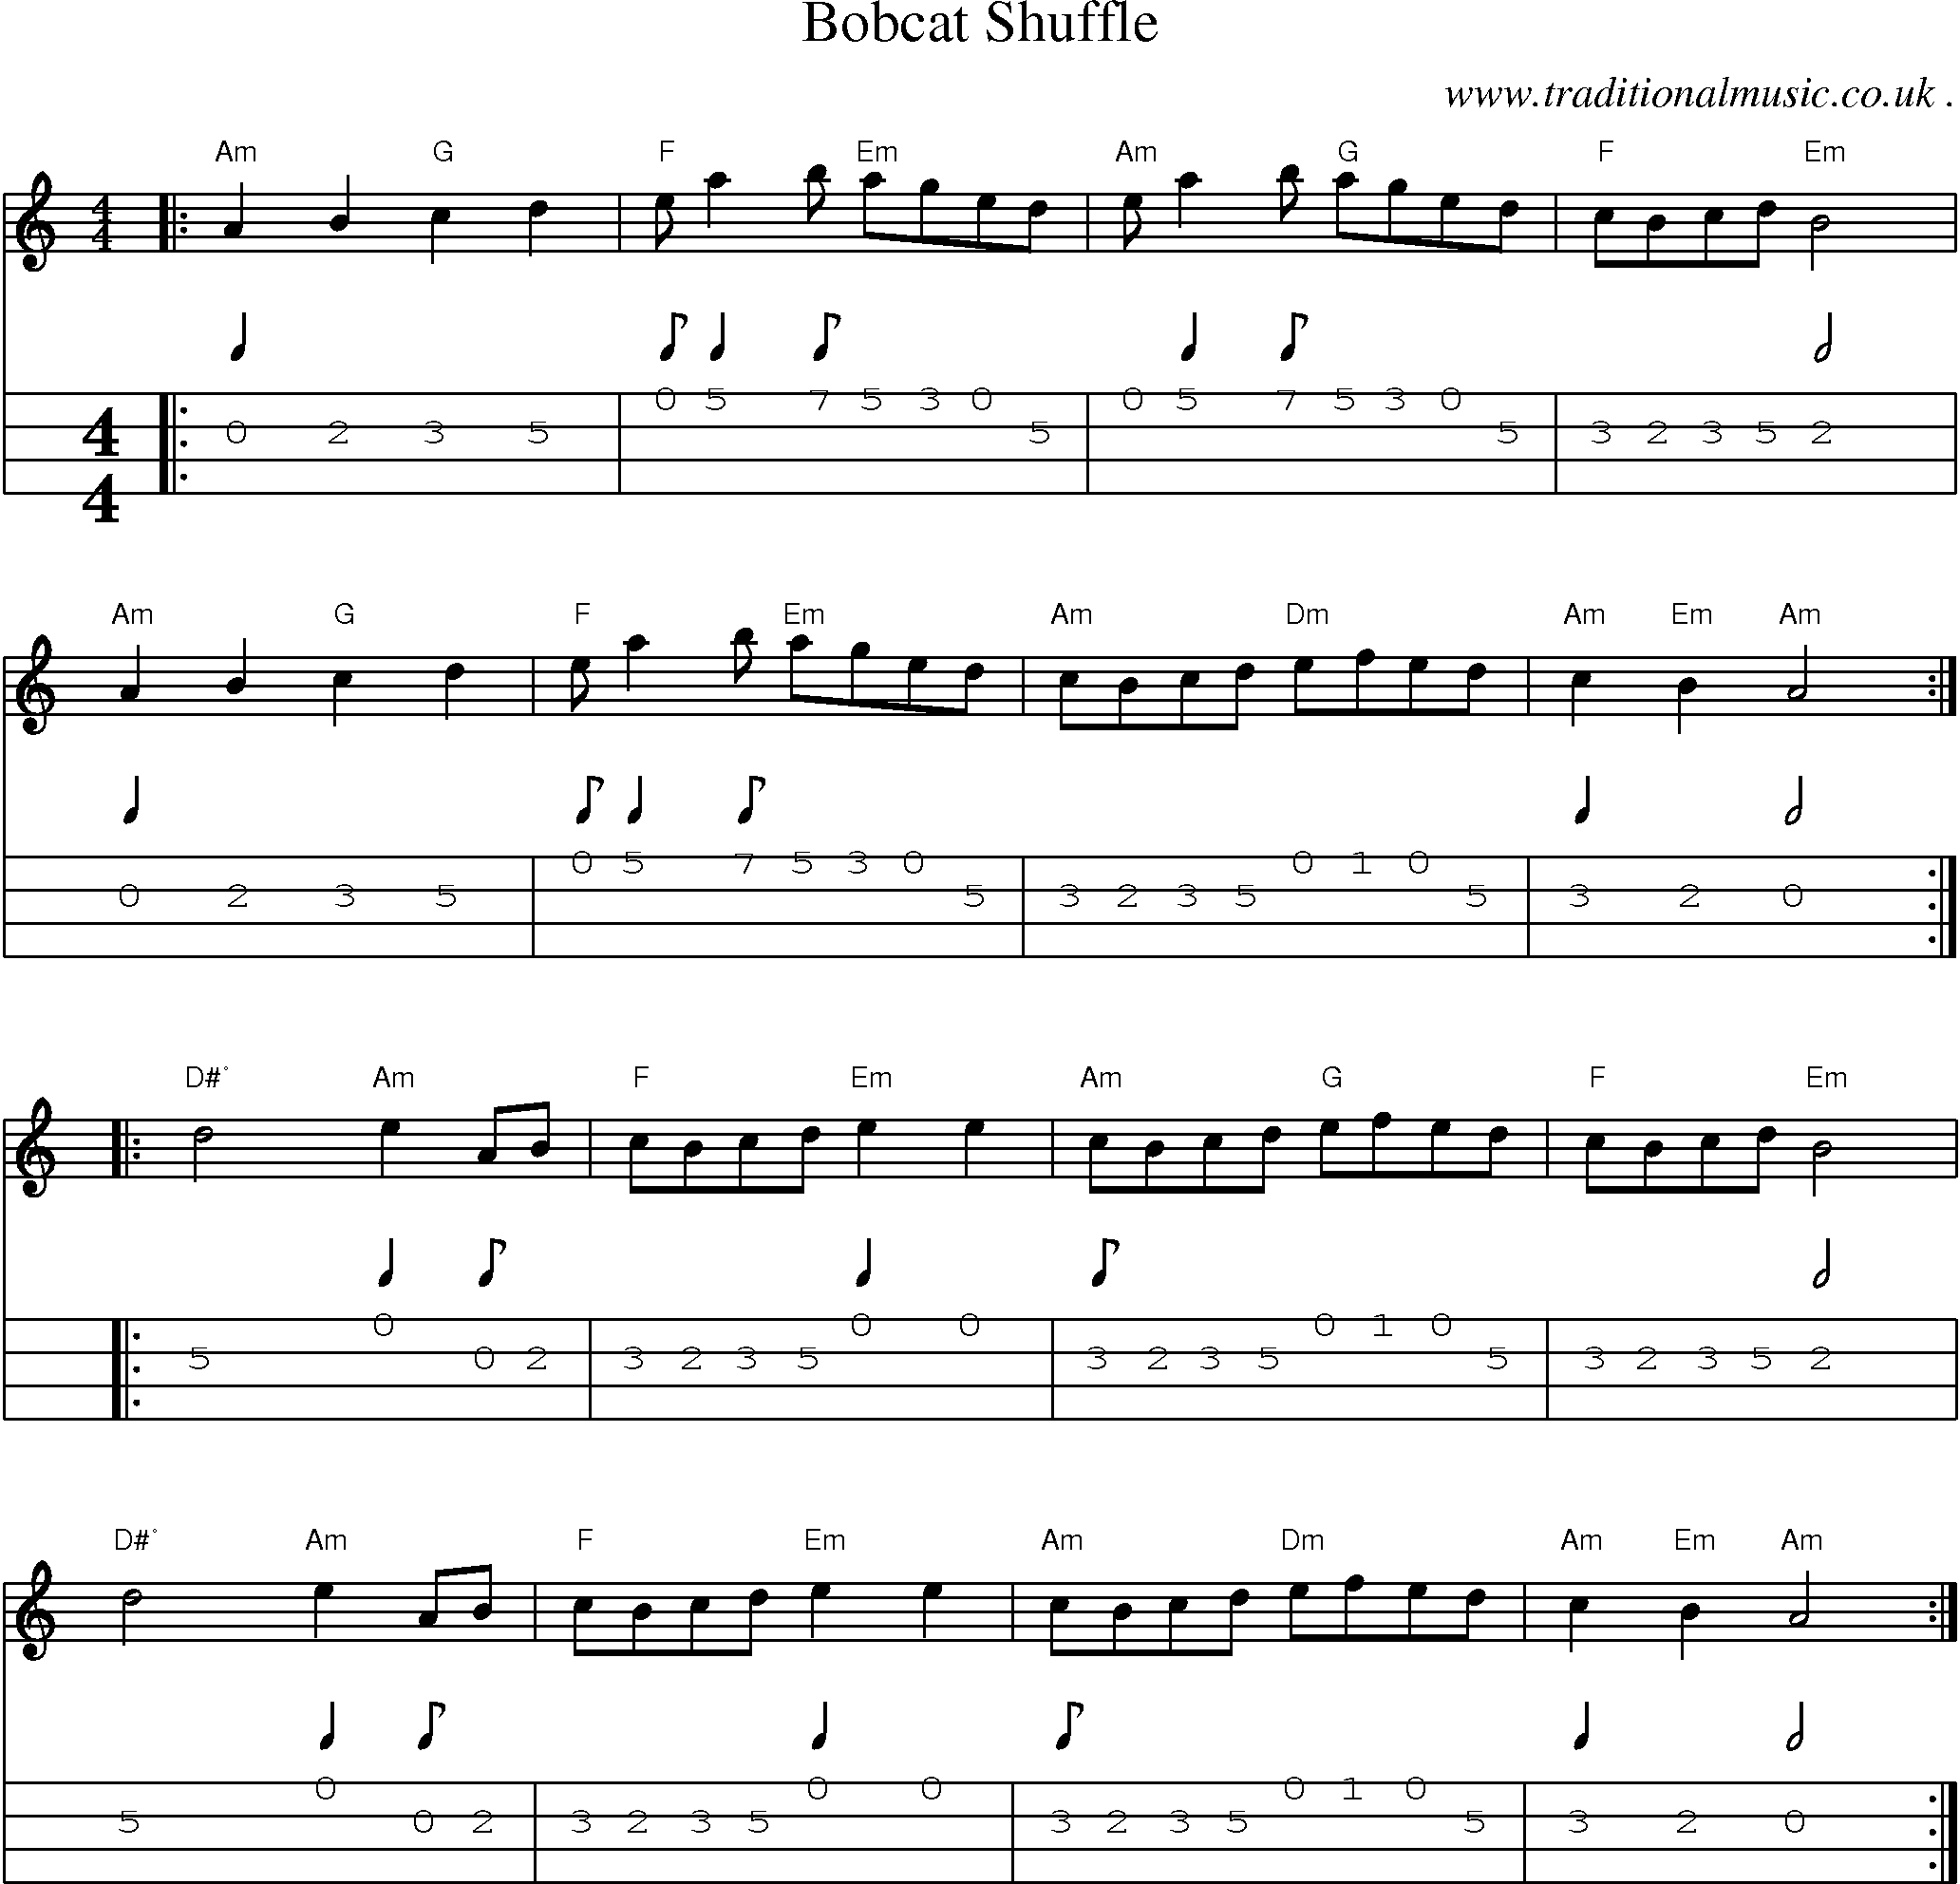 Music Score and Mandolin Tabs for Bobcat Shuffle